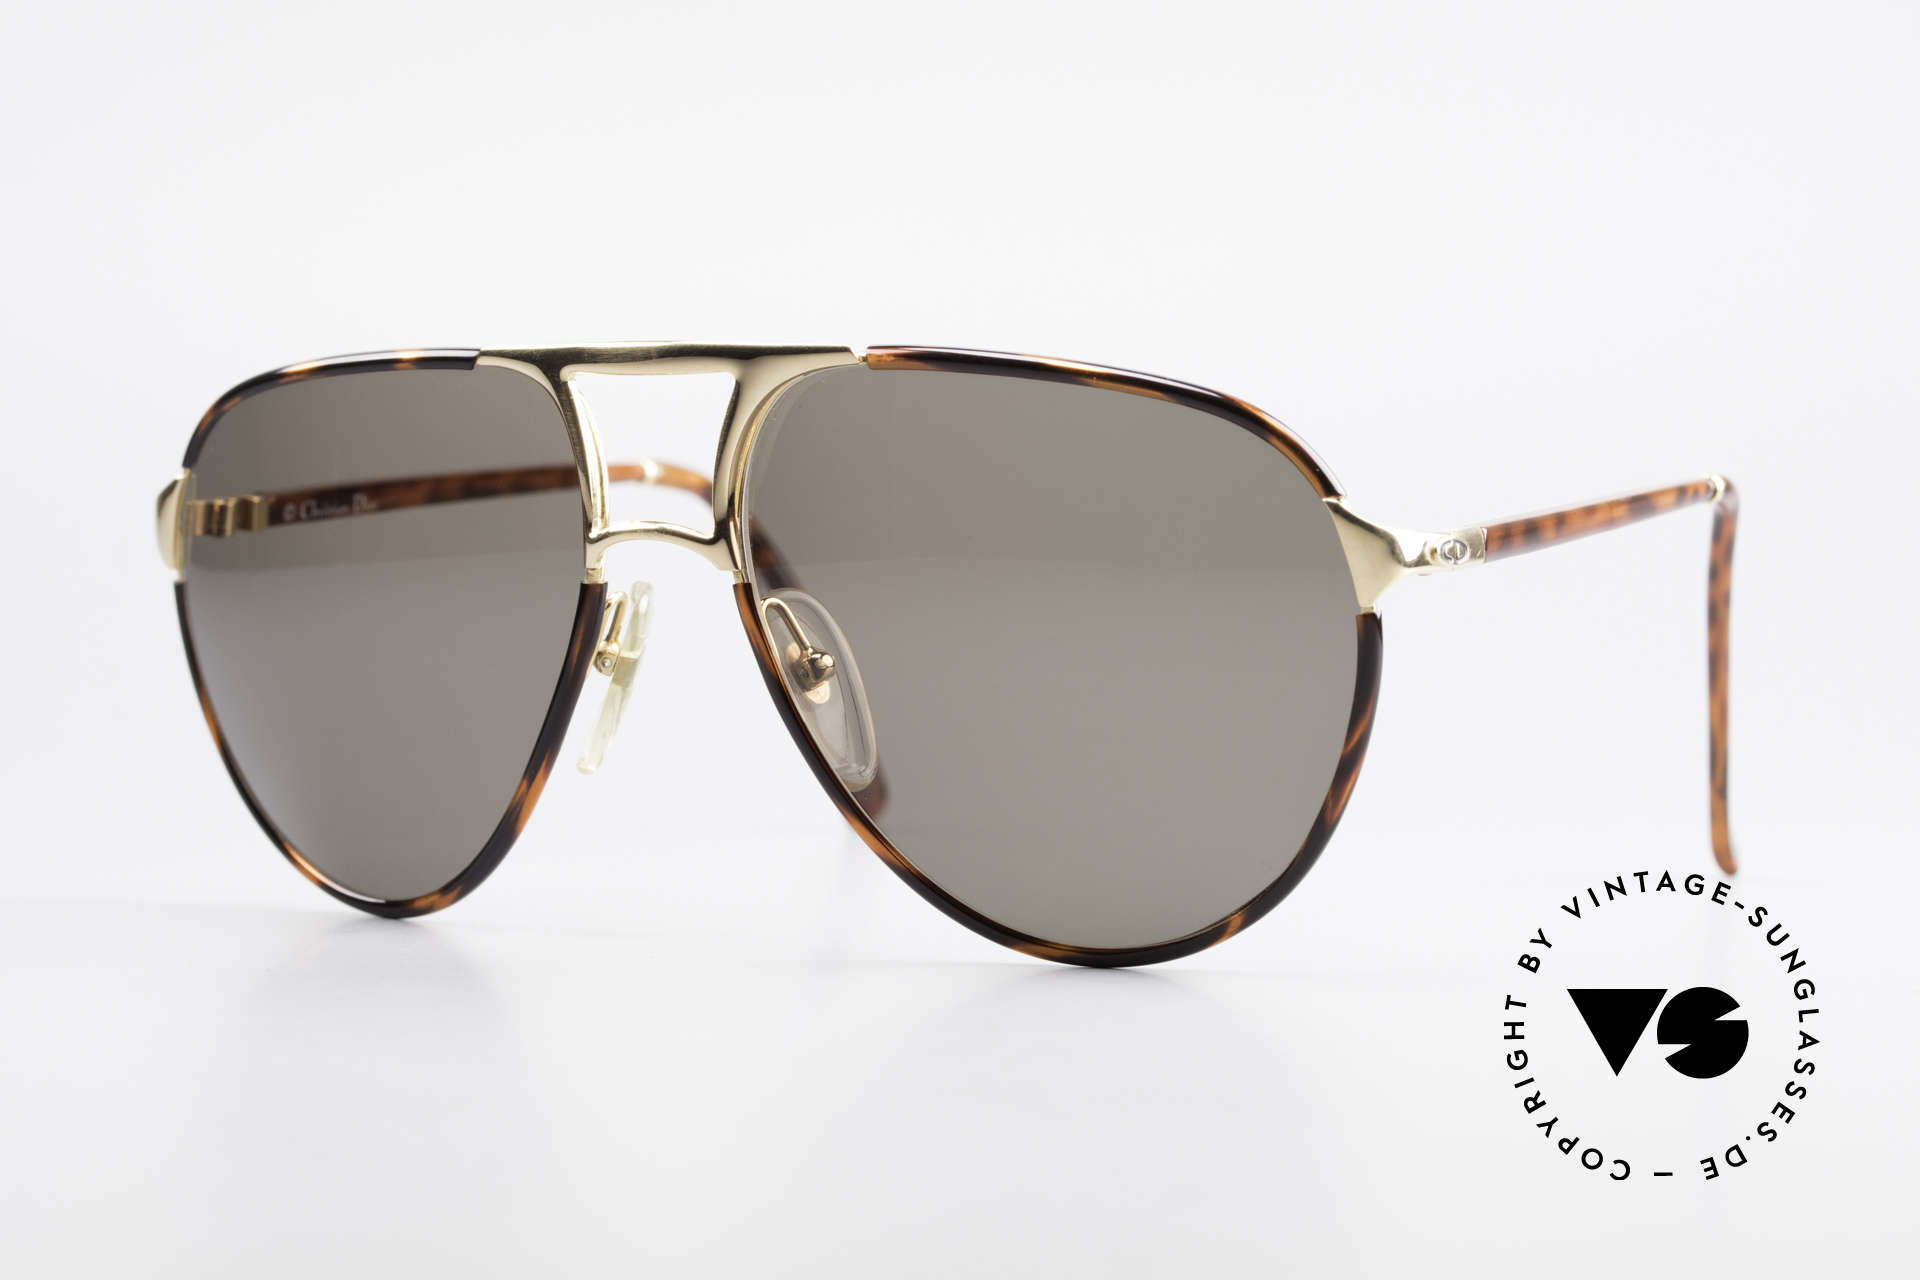 Sunglasses Christian Dior 2505 Aviator 